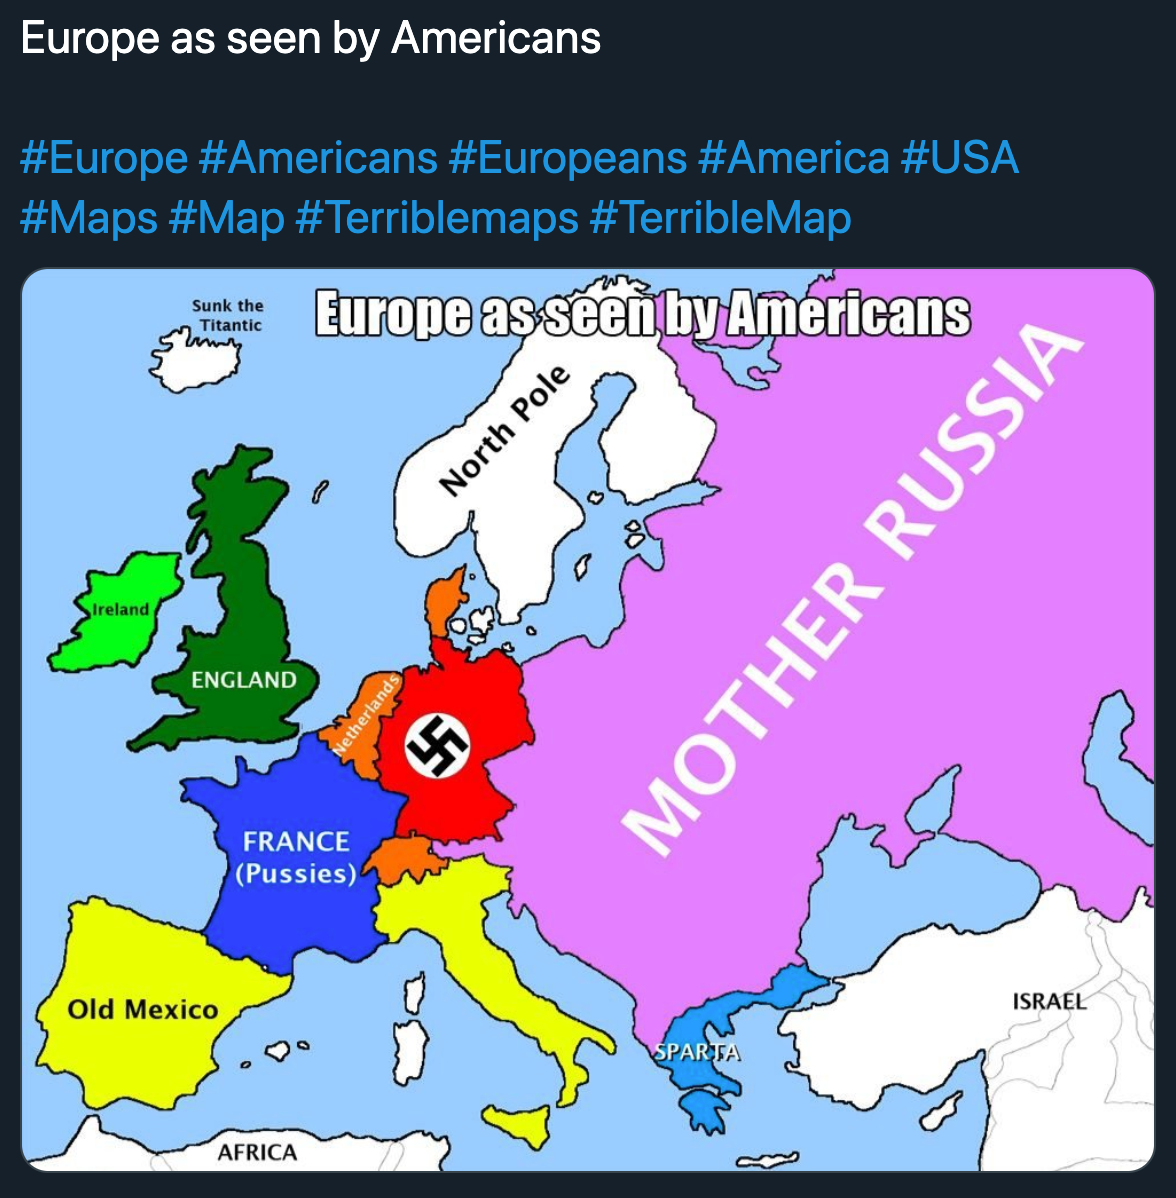 terrible map jokes - europe as seen by americans